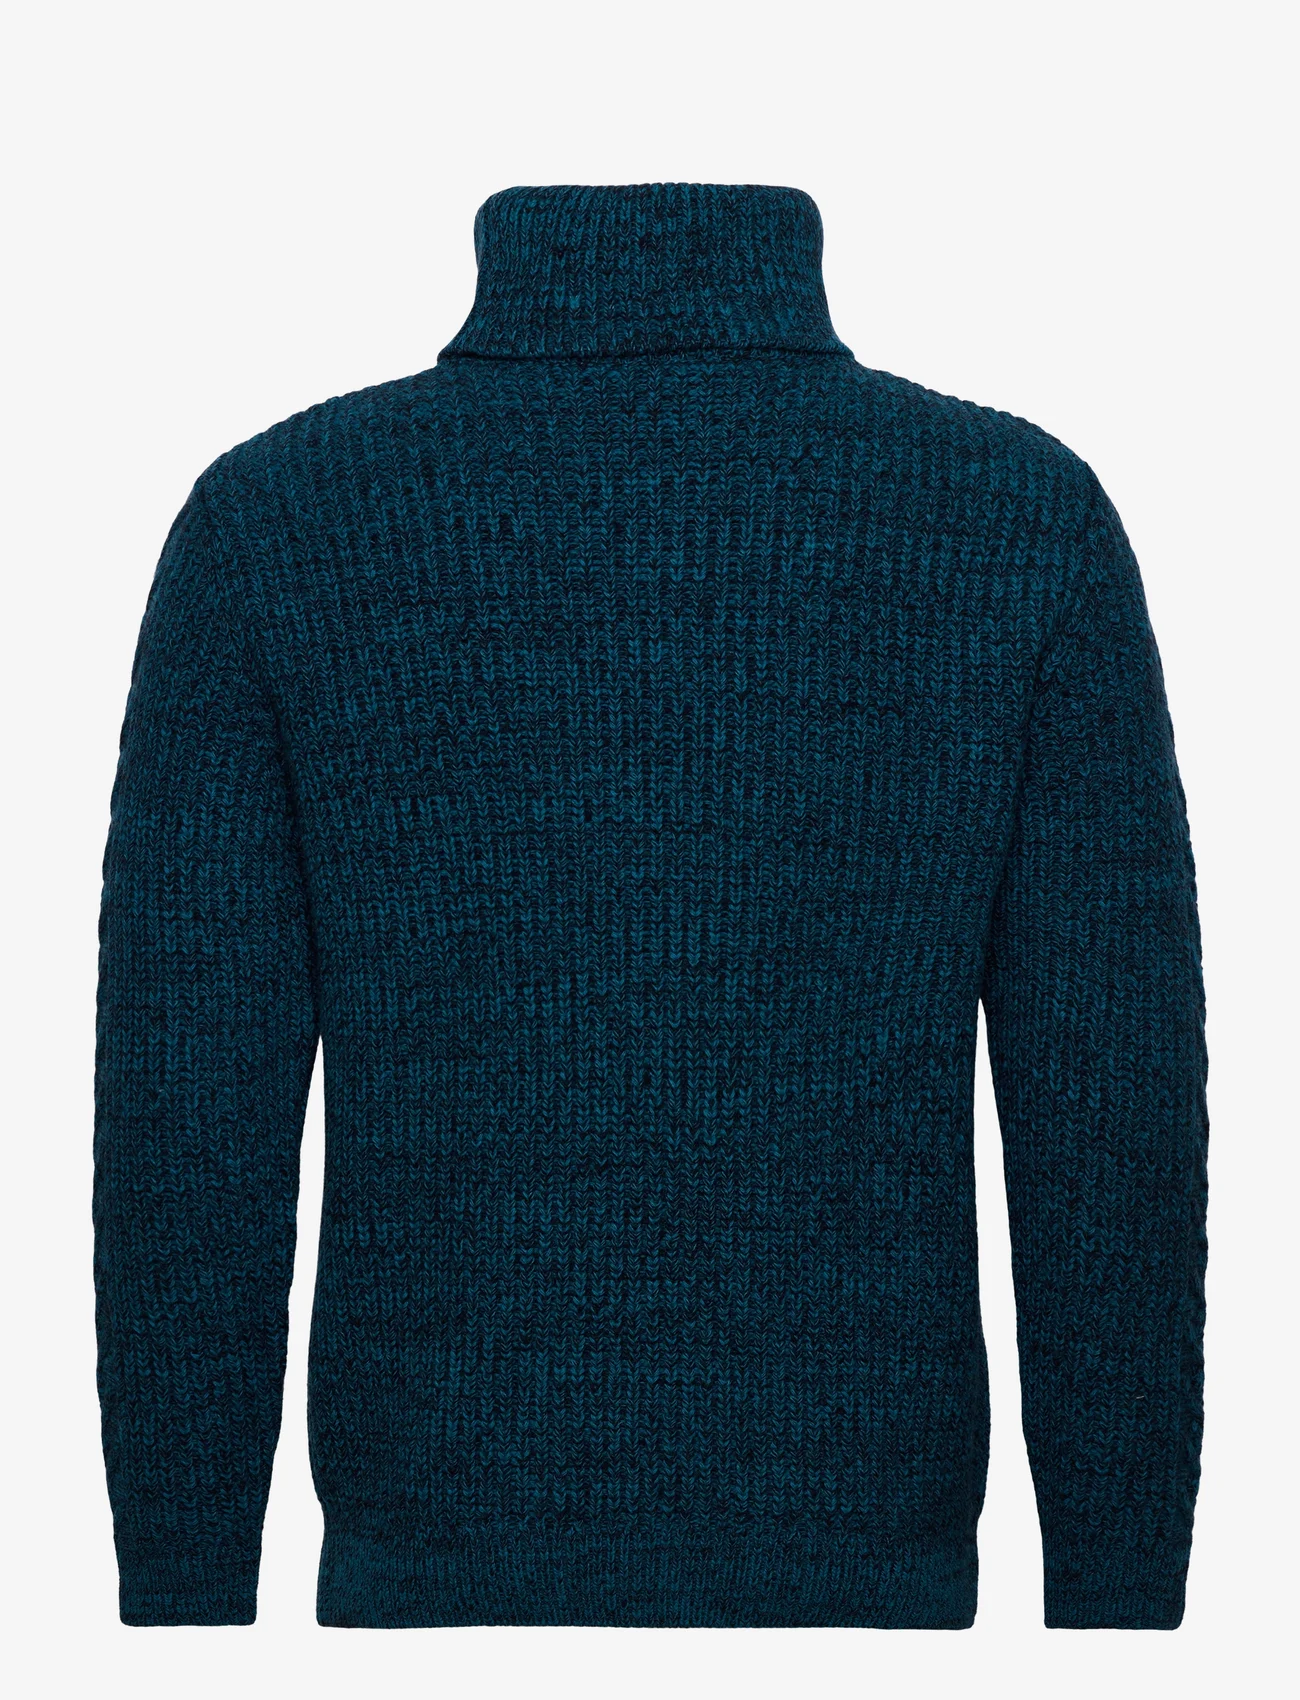 Armor Lux - Turtle neck Sweater Héritage - turtleneck - moulinÉ bleu glacial - 1